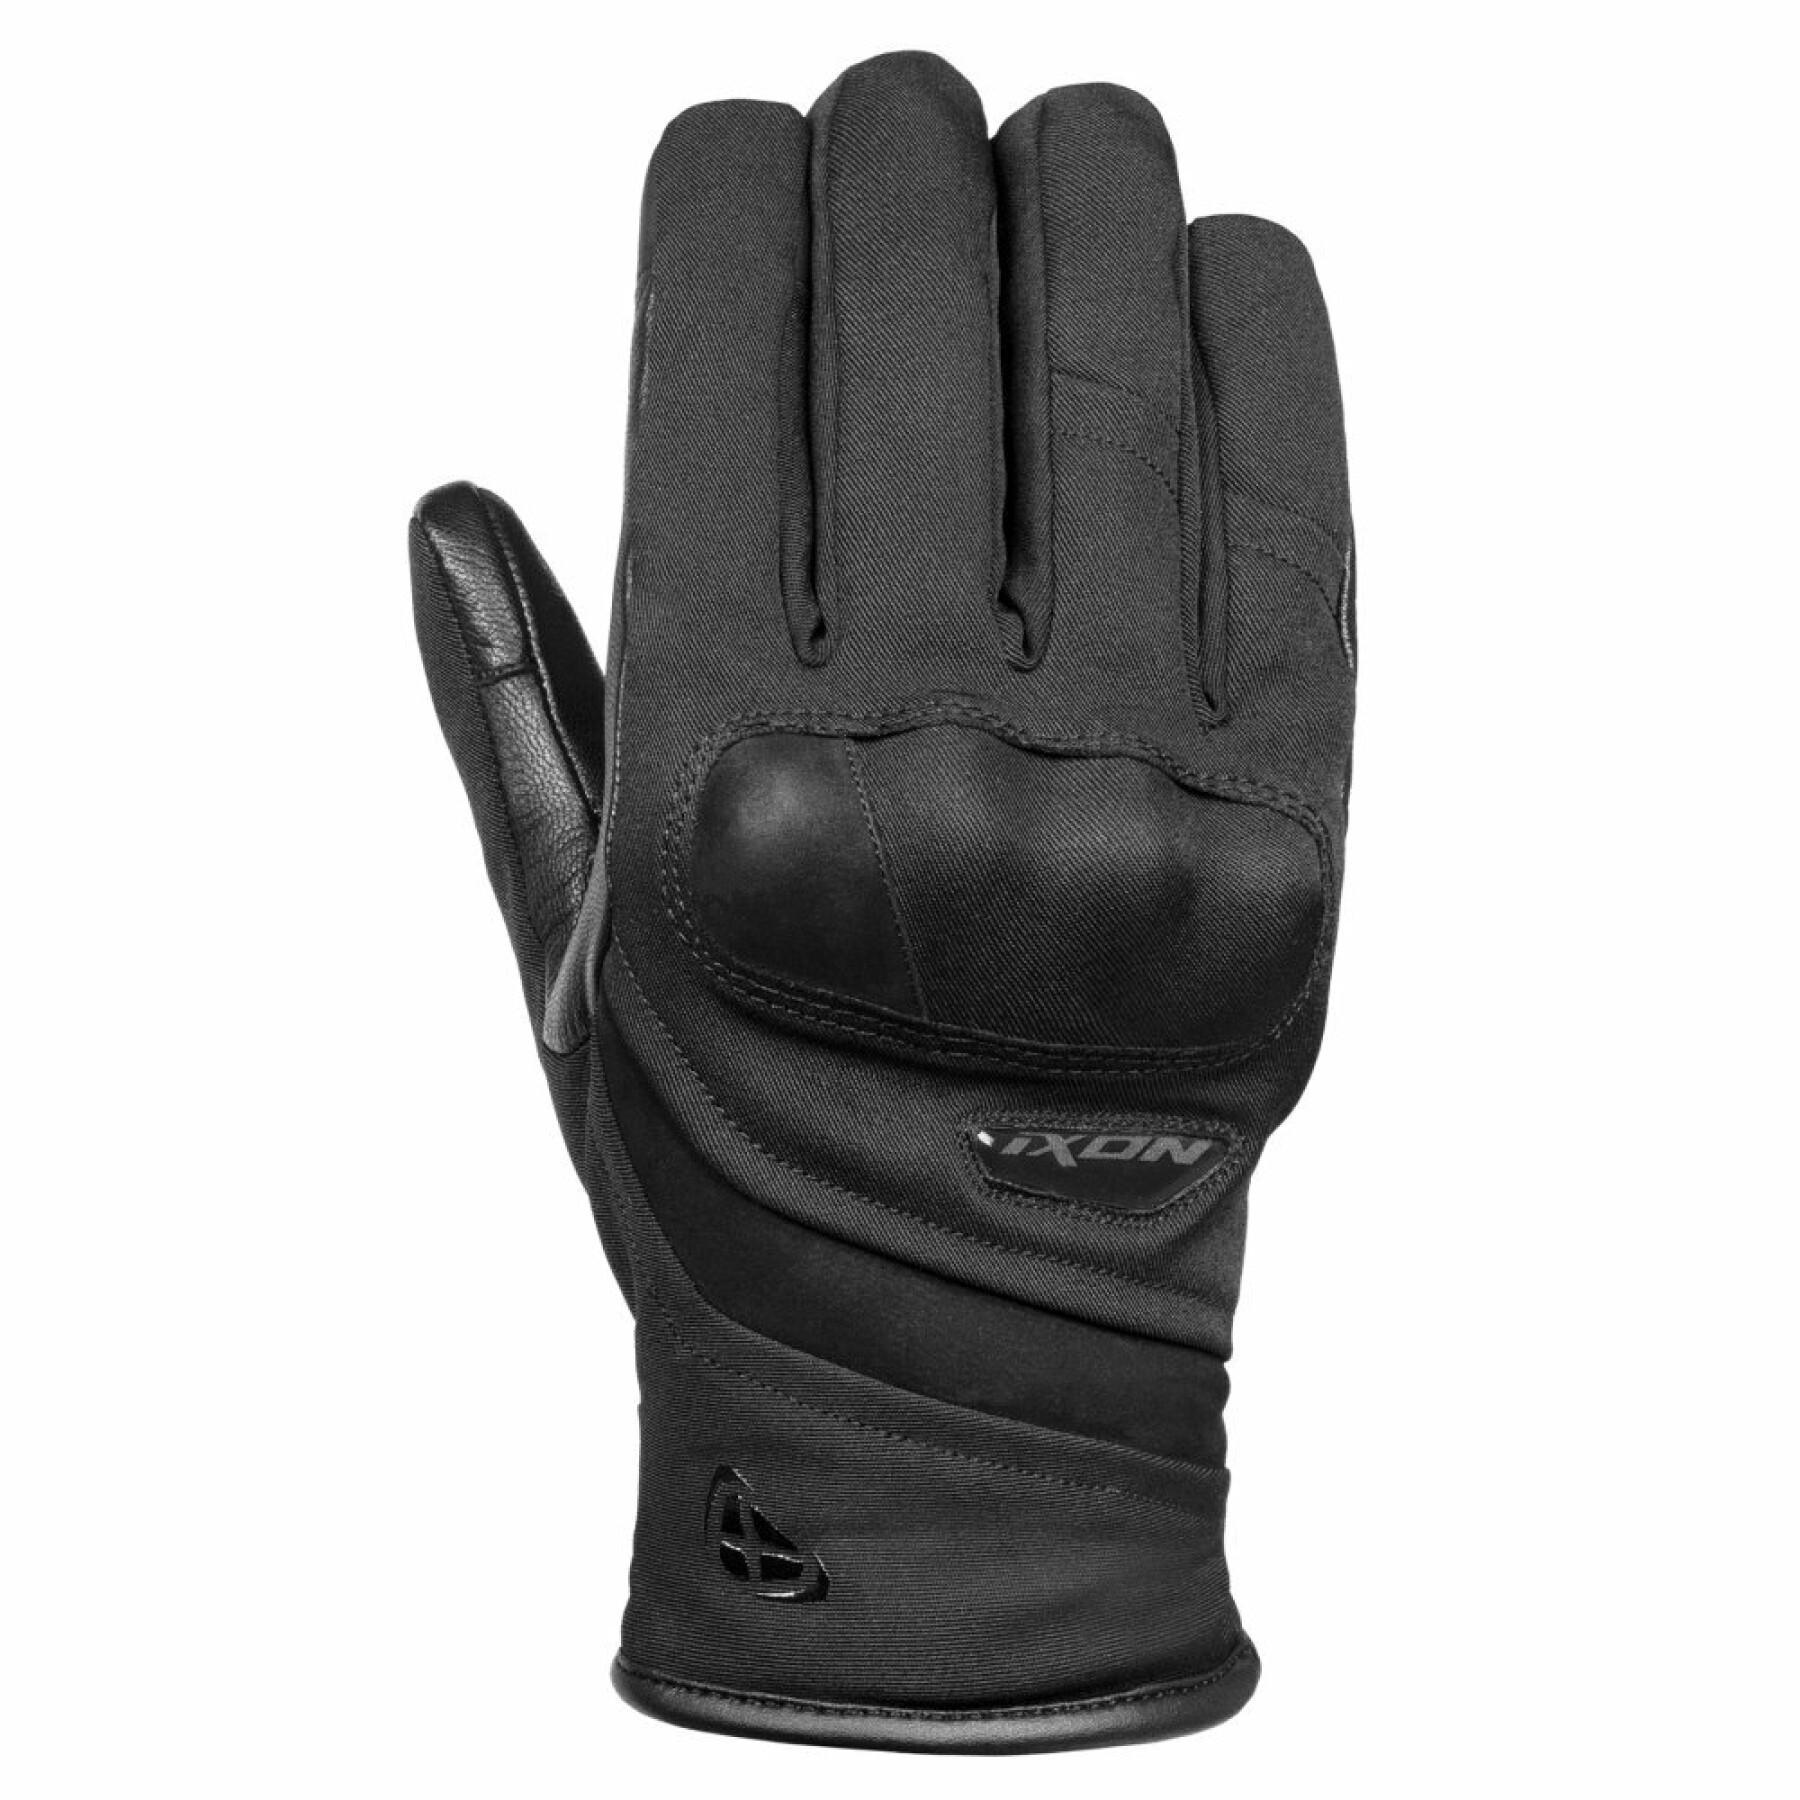 Winter motorcycle gloves Ixon Pro Fryo